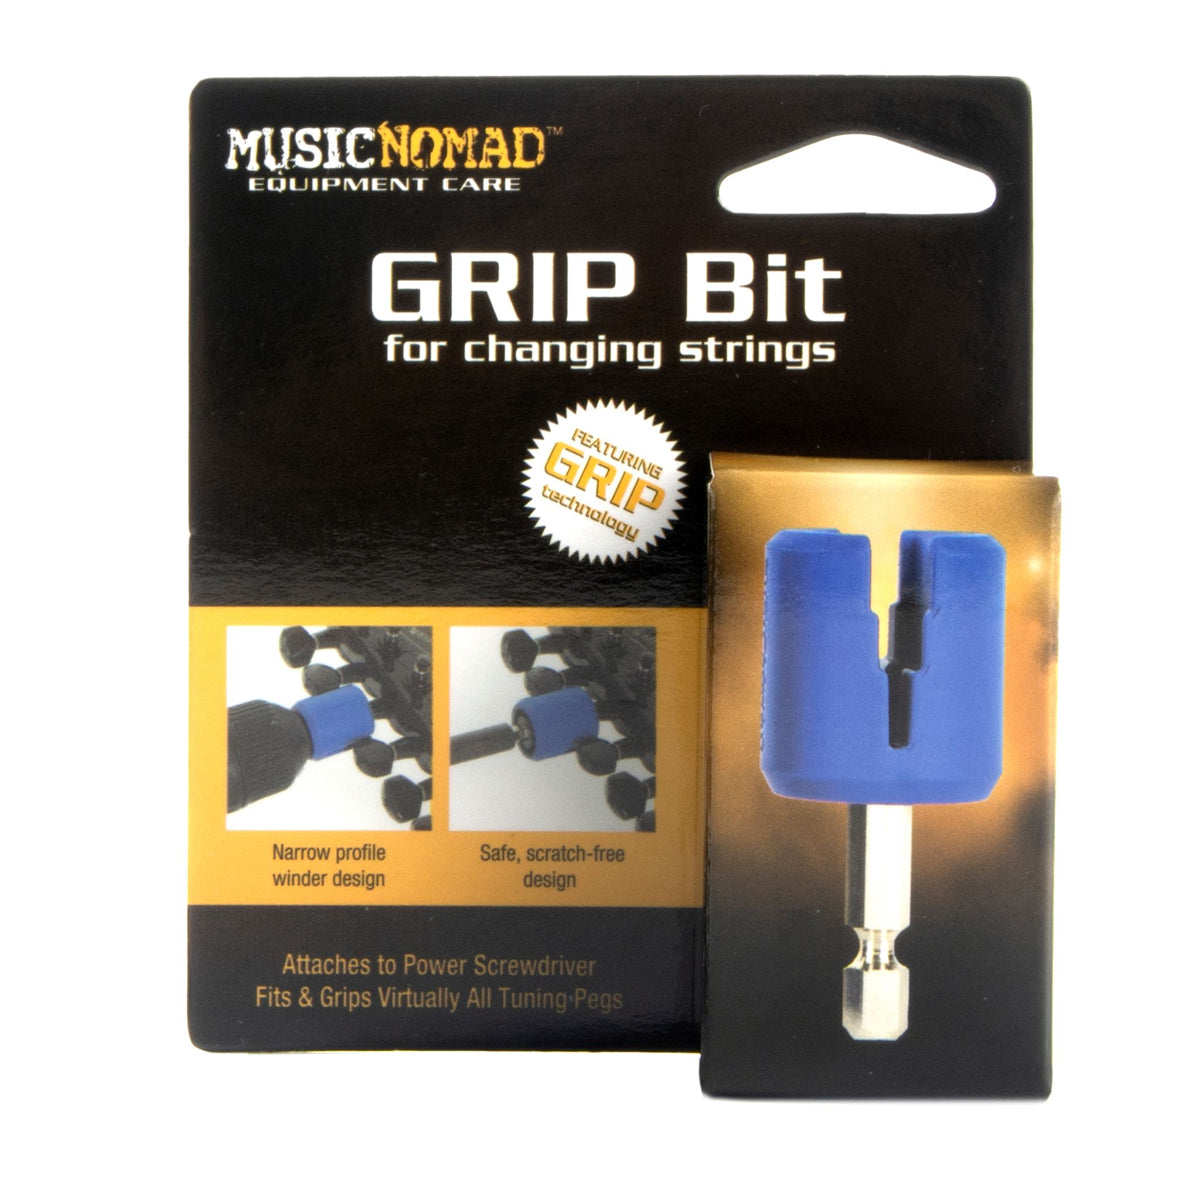 Music Nomad Grip Bit - Peg Winder Attachment